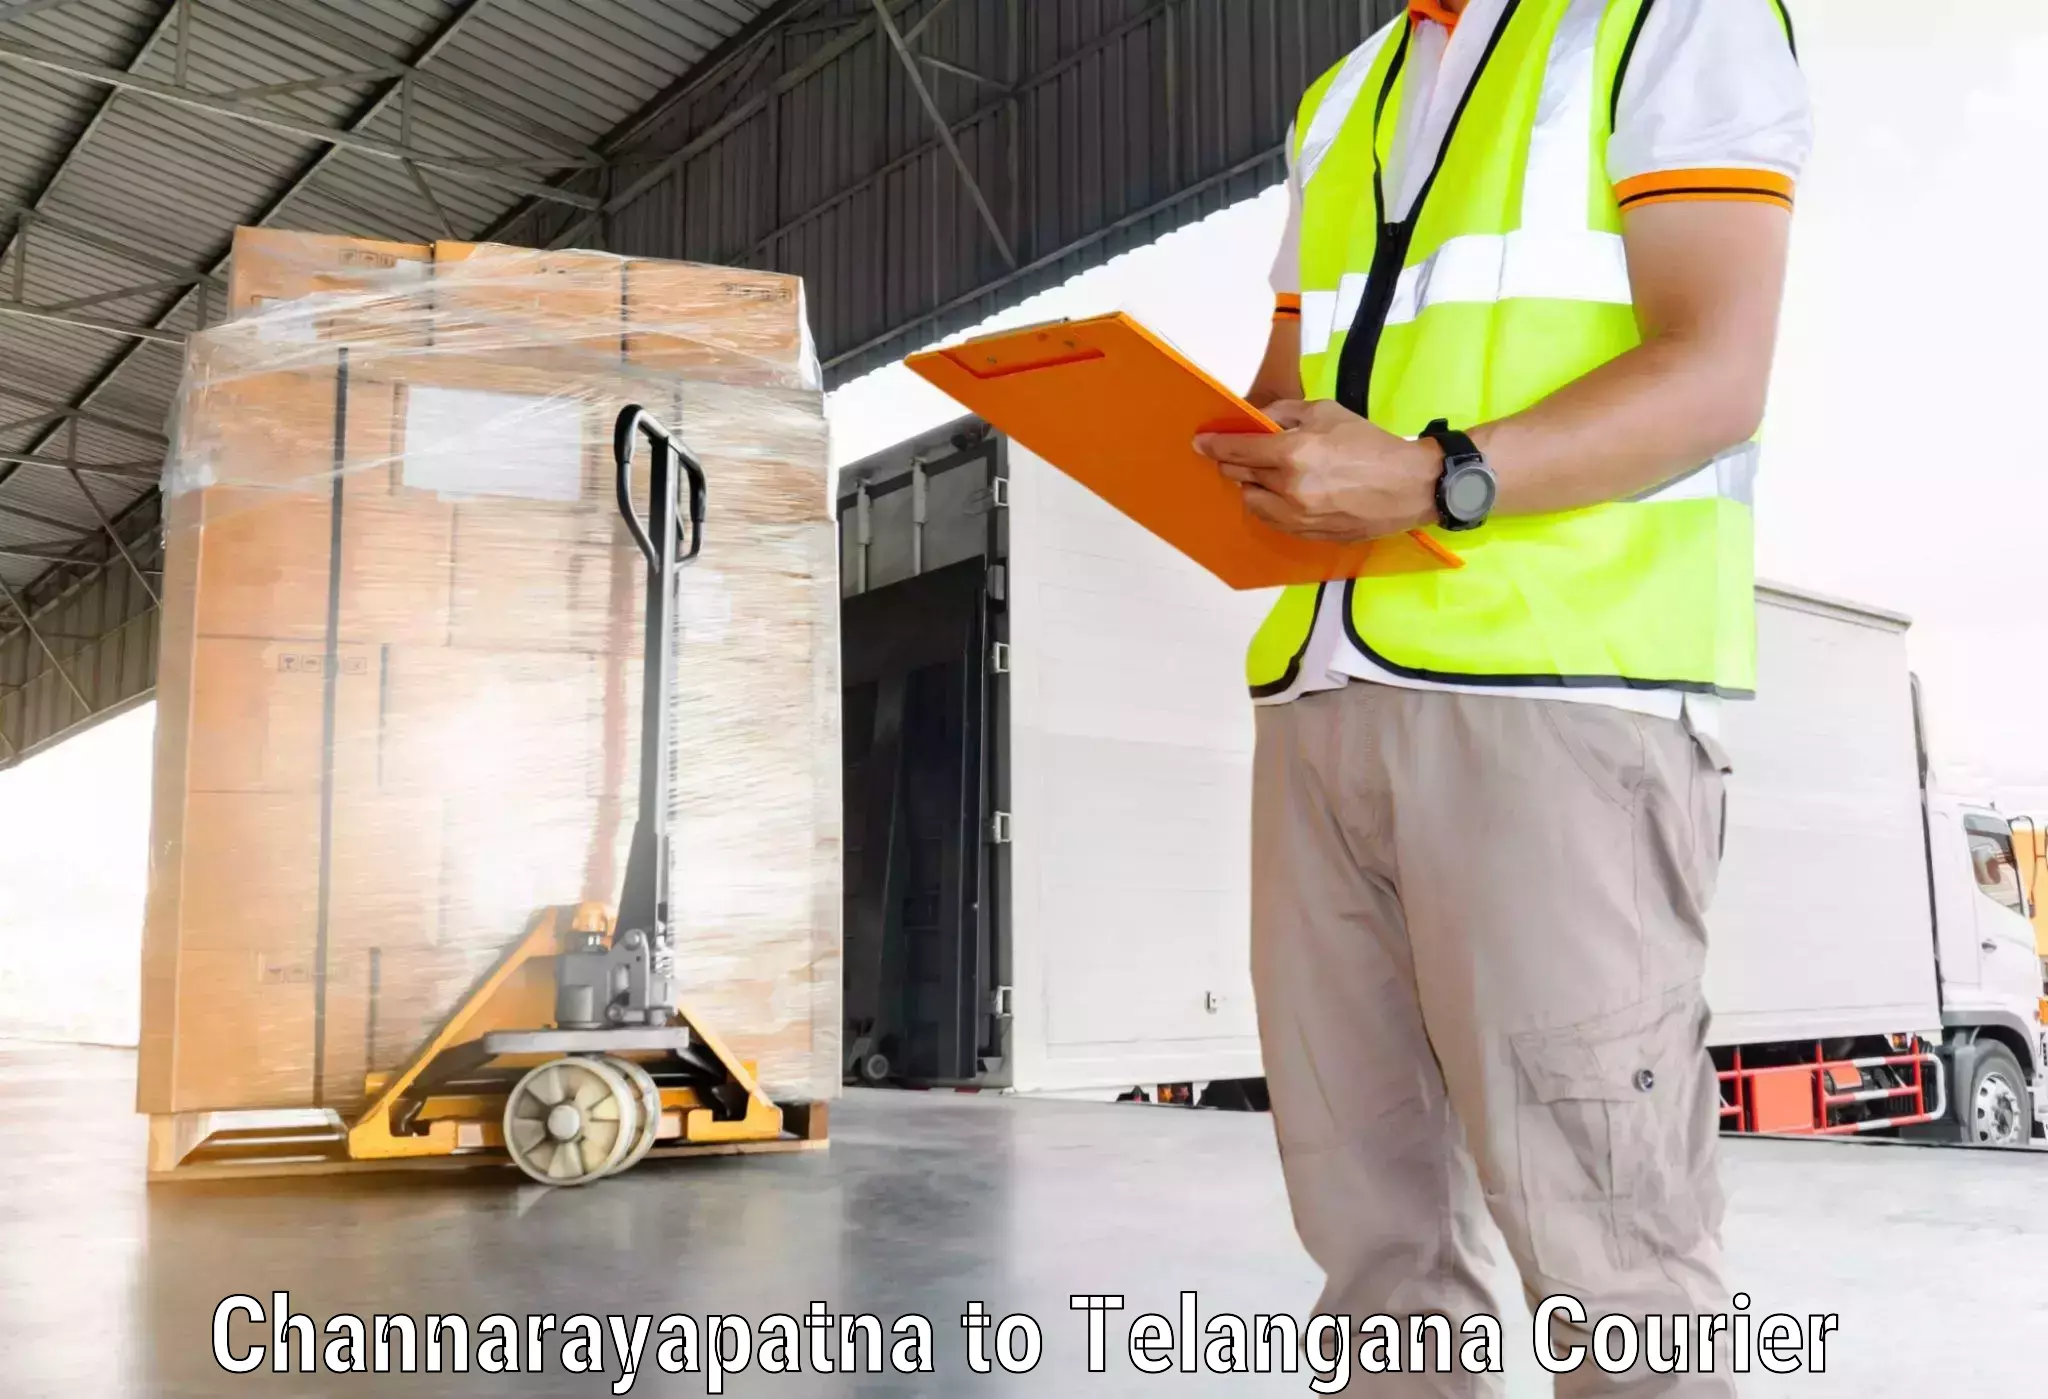 Courier service innovation Channarayapatna to Alair